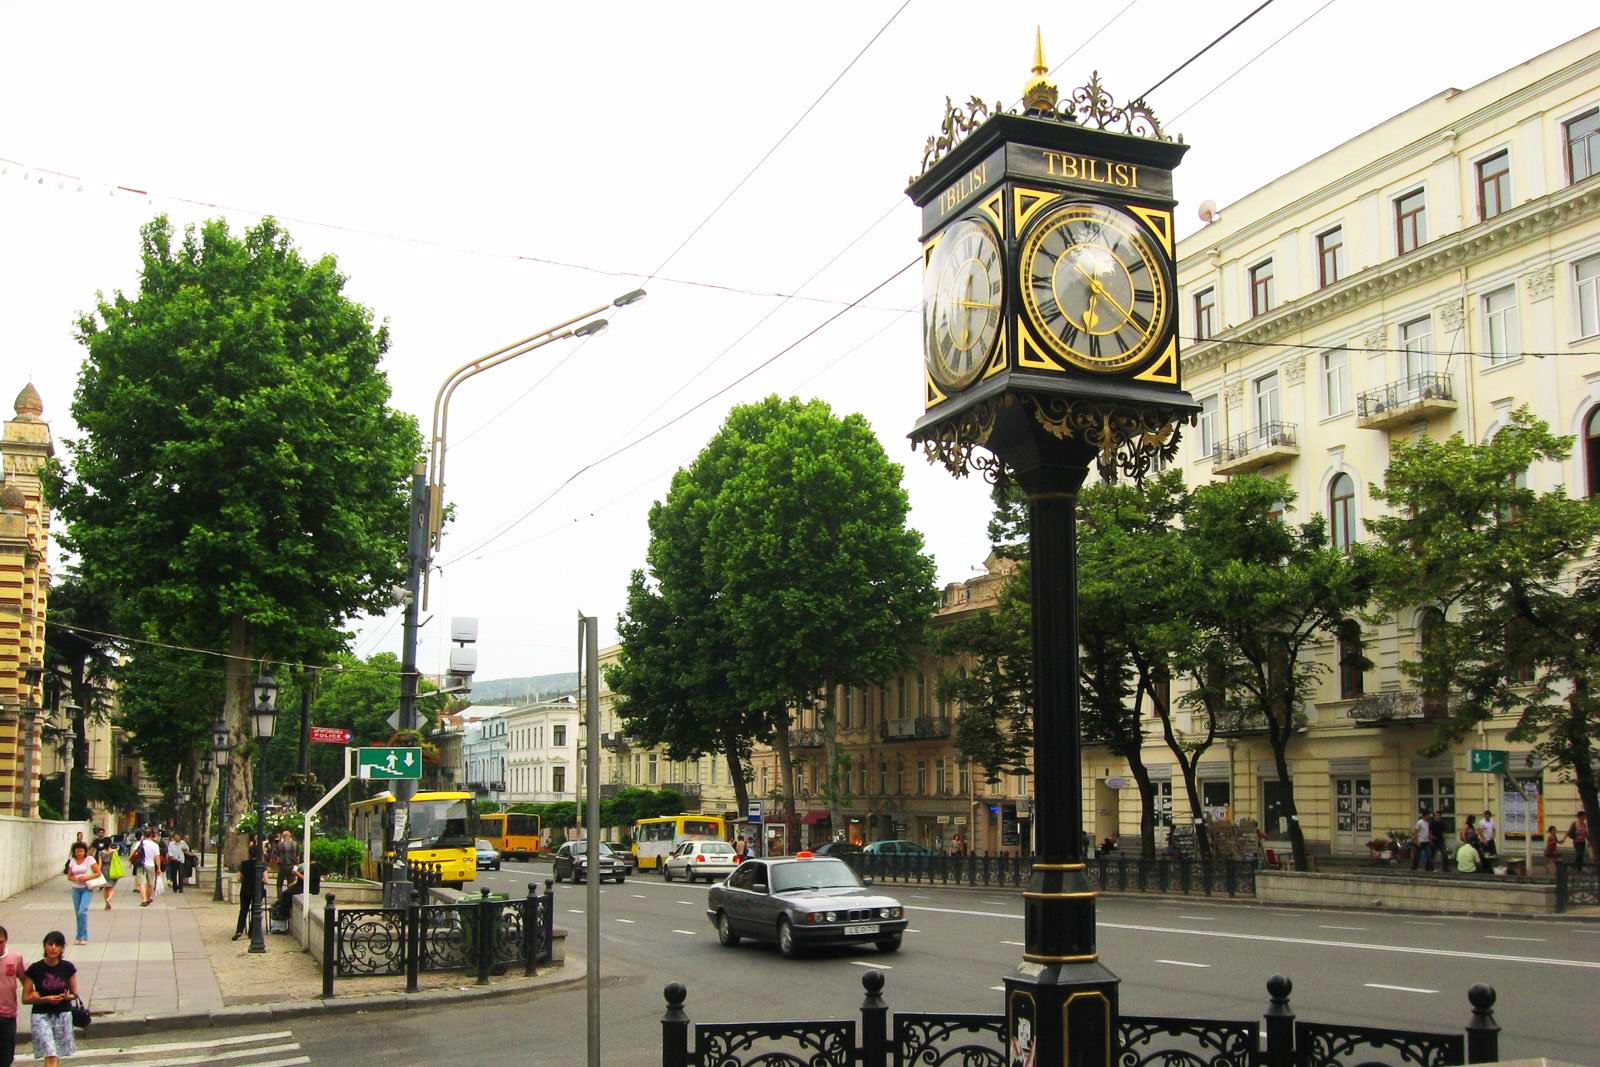 How to walk along Rustaveli Avenue in Tbilisi